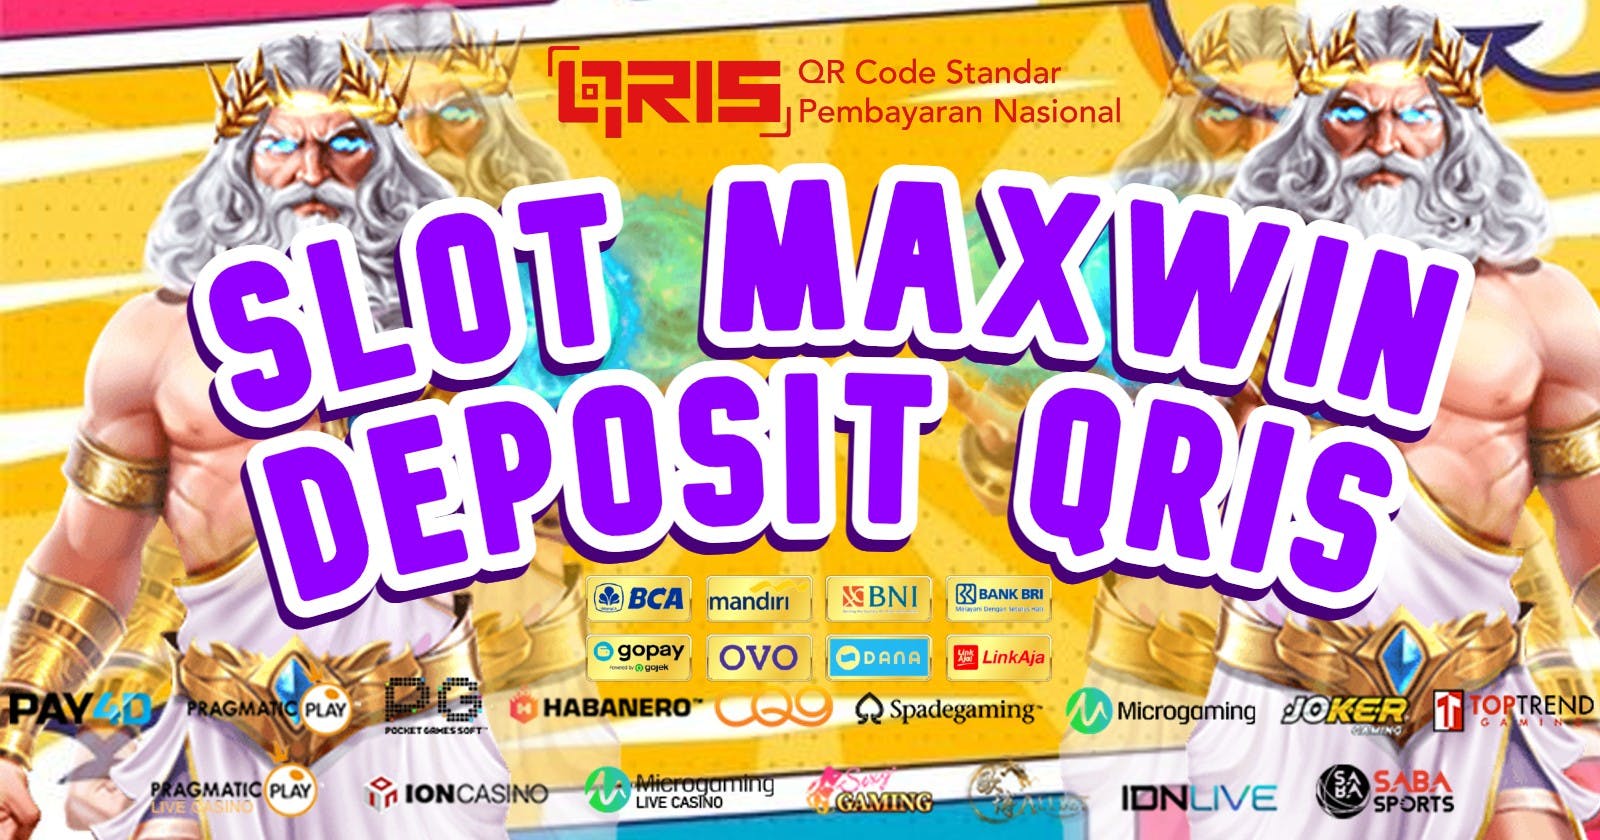 Daftar Slot Maxwin Deposit Q-ris